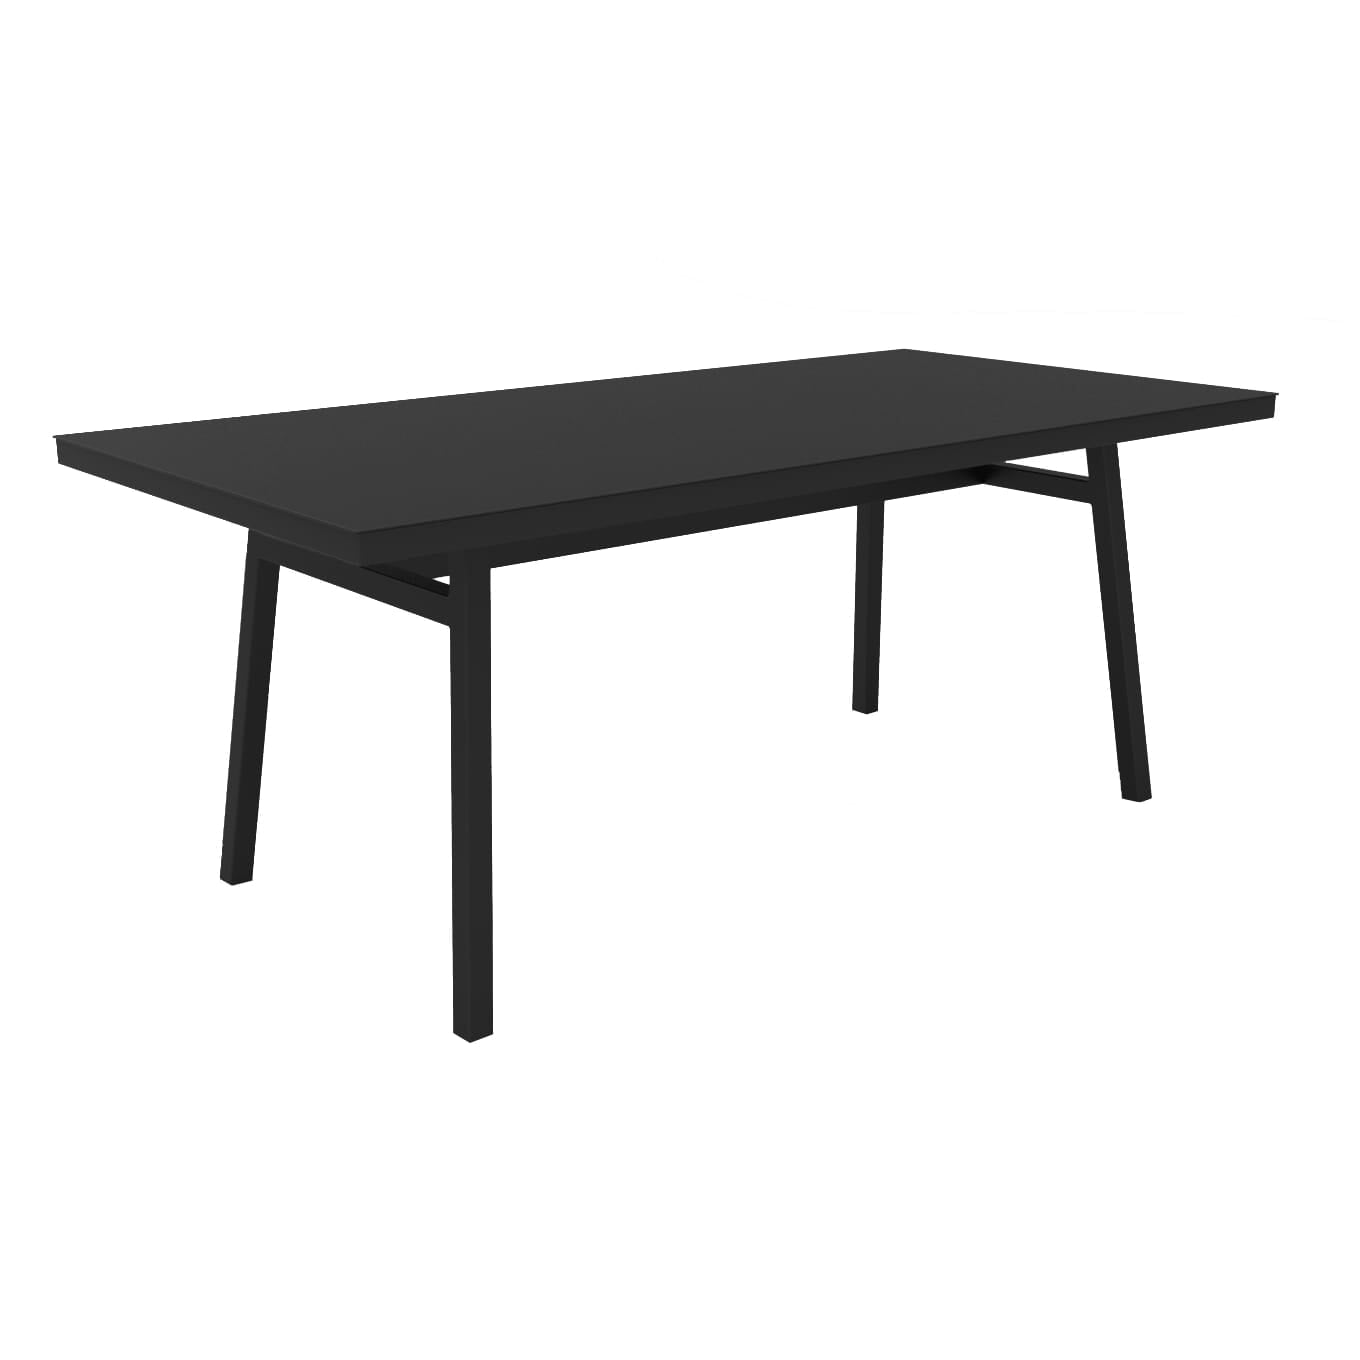 Resol Milano rectangular table indoors, outdoors 180x90 black